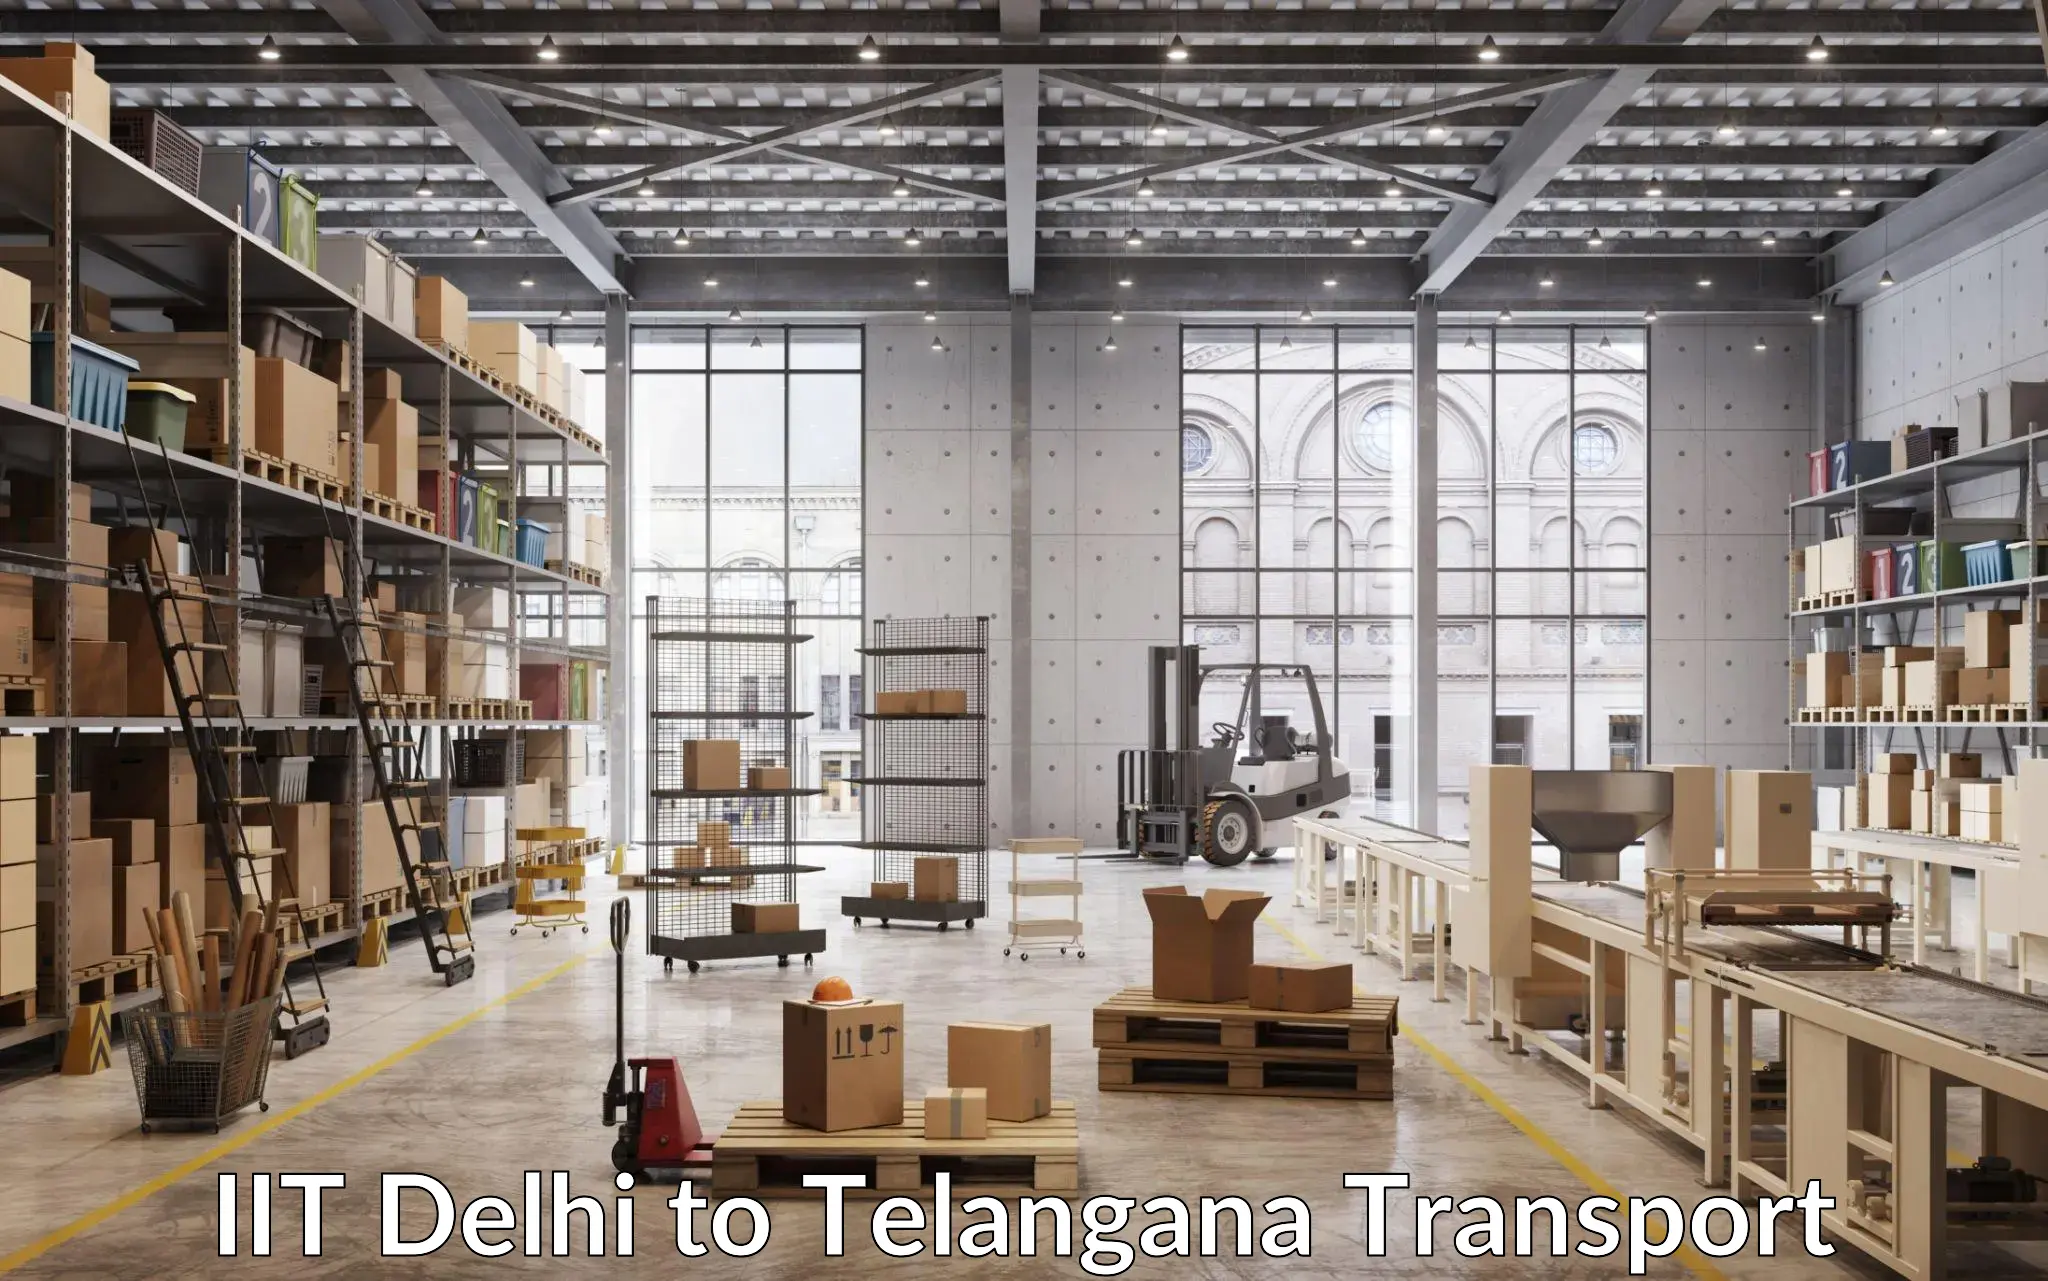 Express transport services in IIT Delhi to Warangal